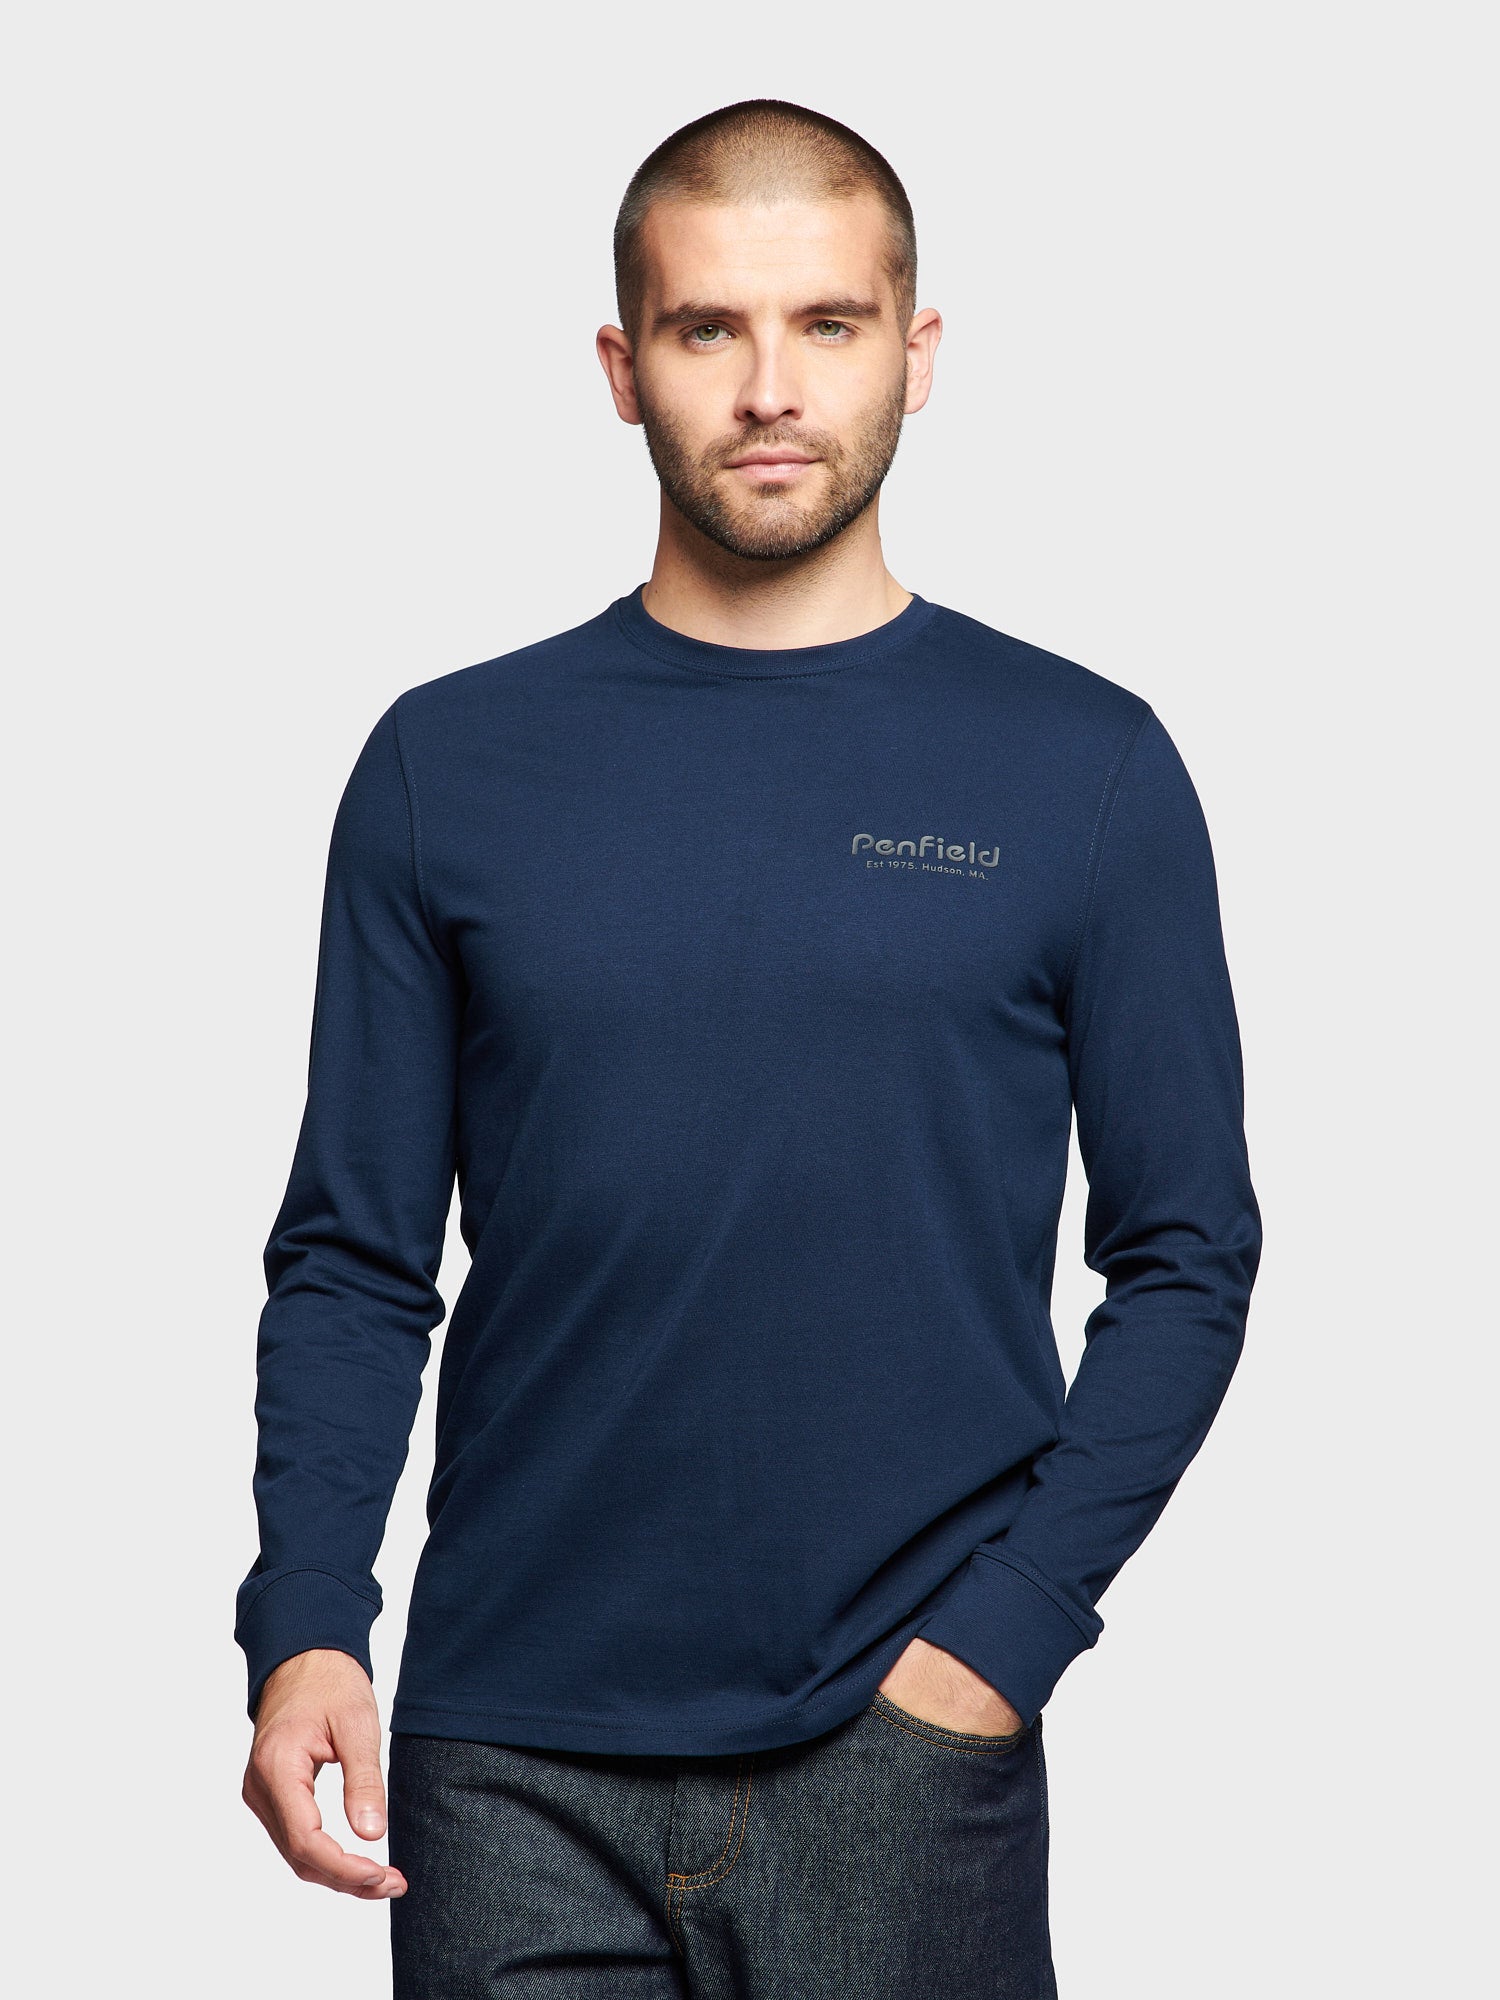 Arc Mountain Long Sleeve T-Shirt in Navy Blue